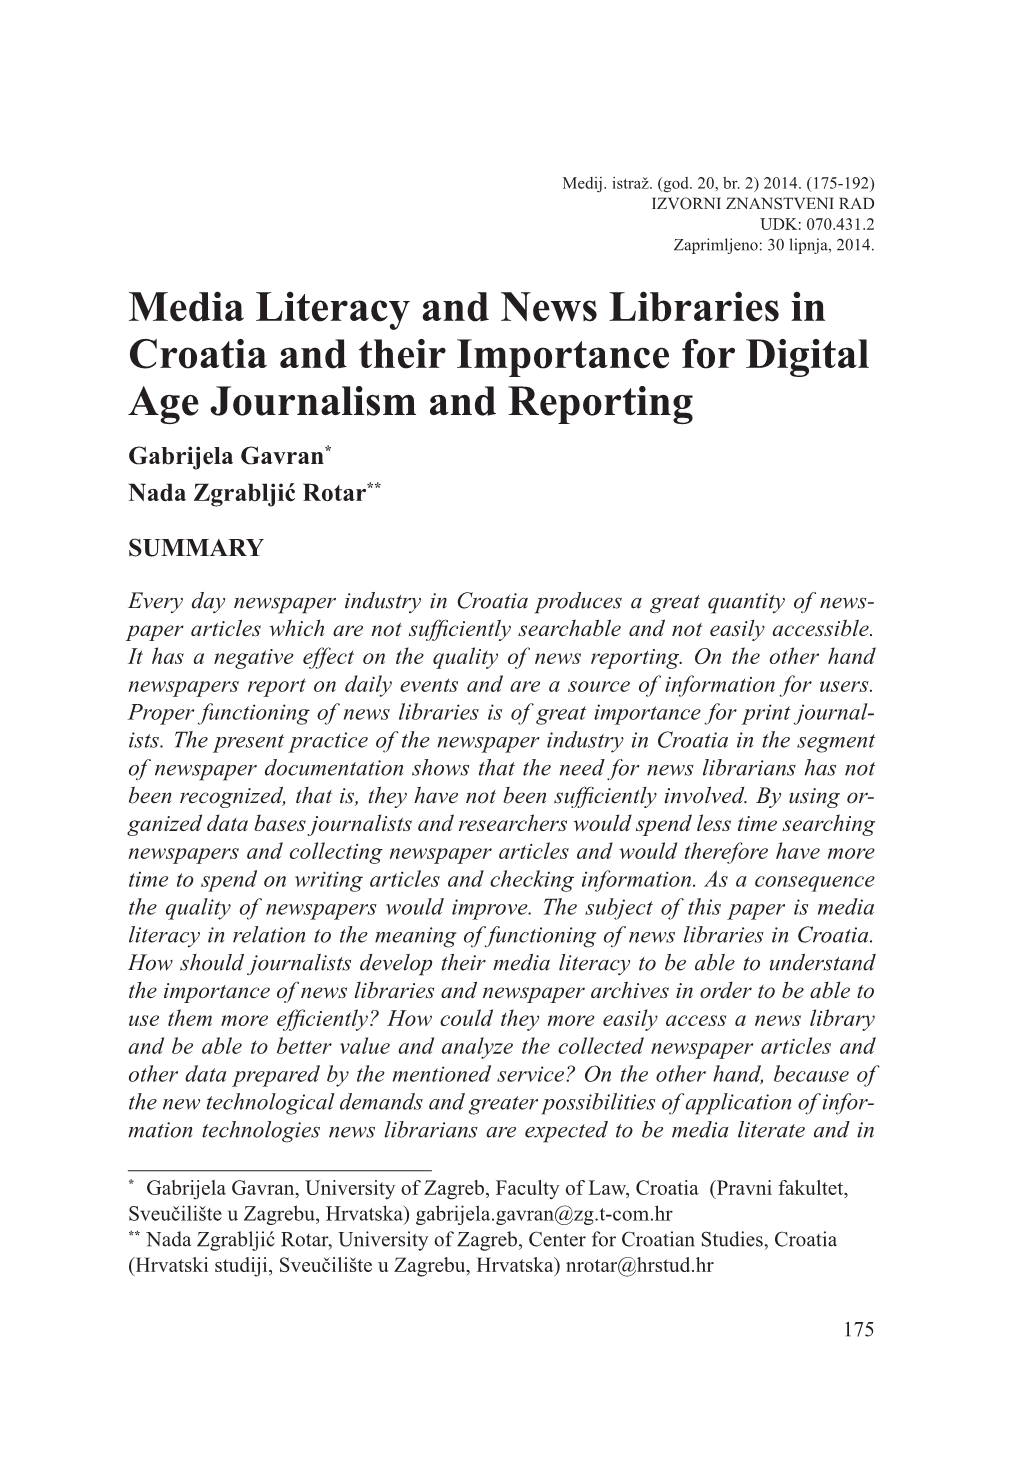 Media Literacy and News Libraries in Croatia and Their Importance for Digital Age Journalism and Reporting Gabrijela Gavran* Nada Zgrabljić Rotar**